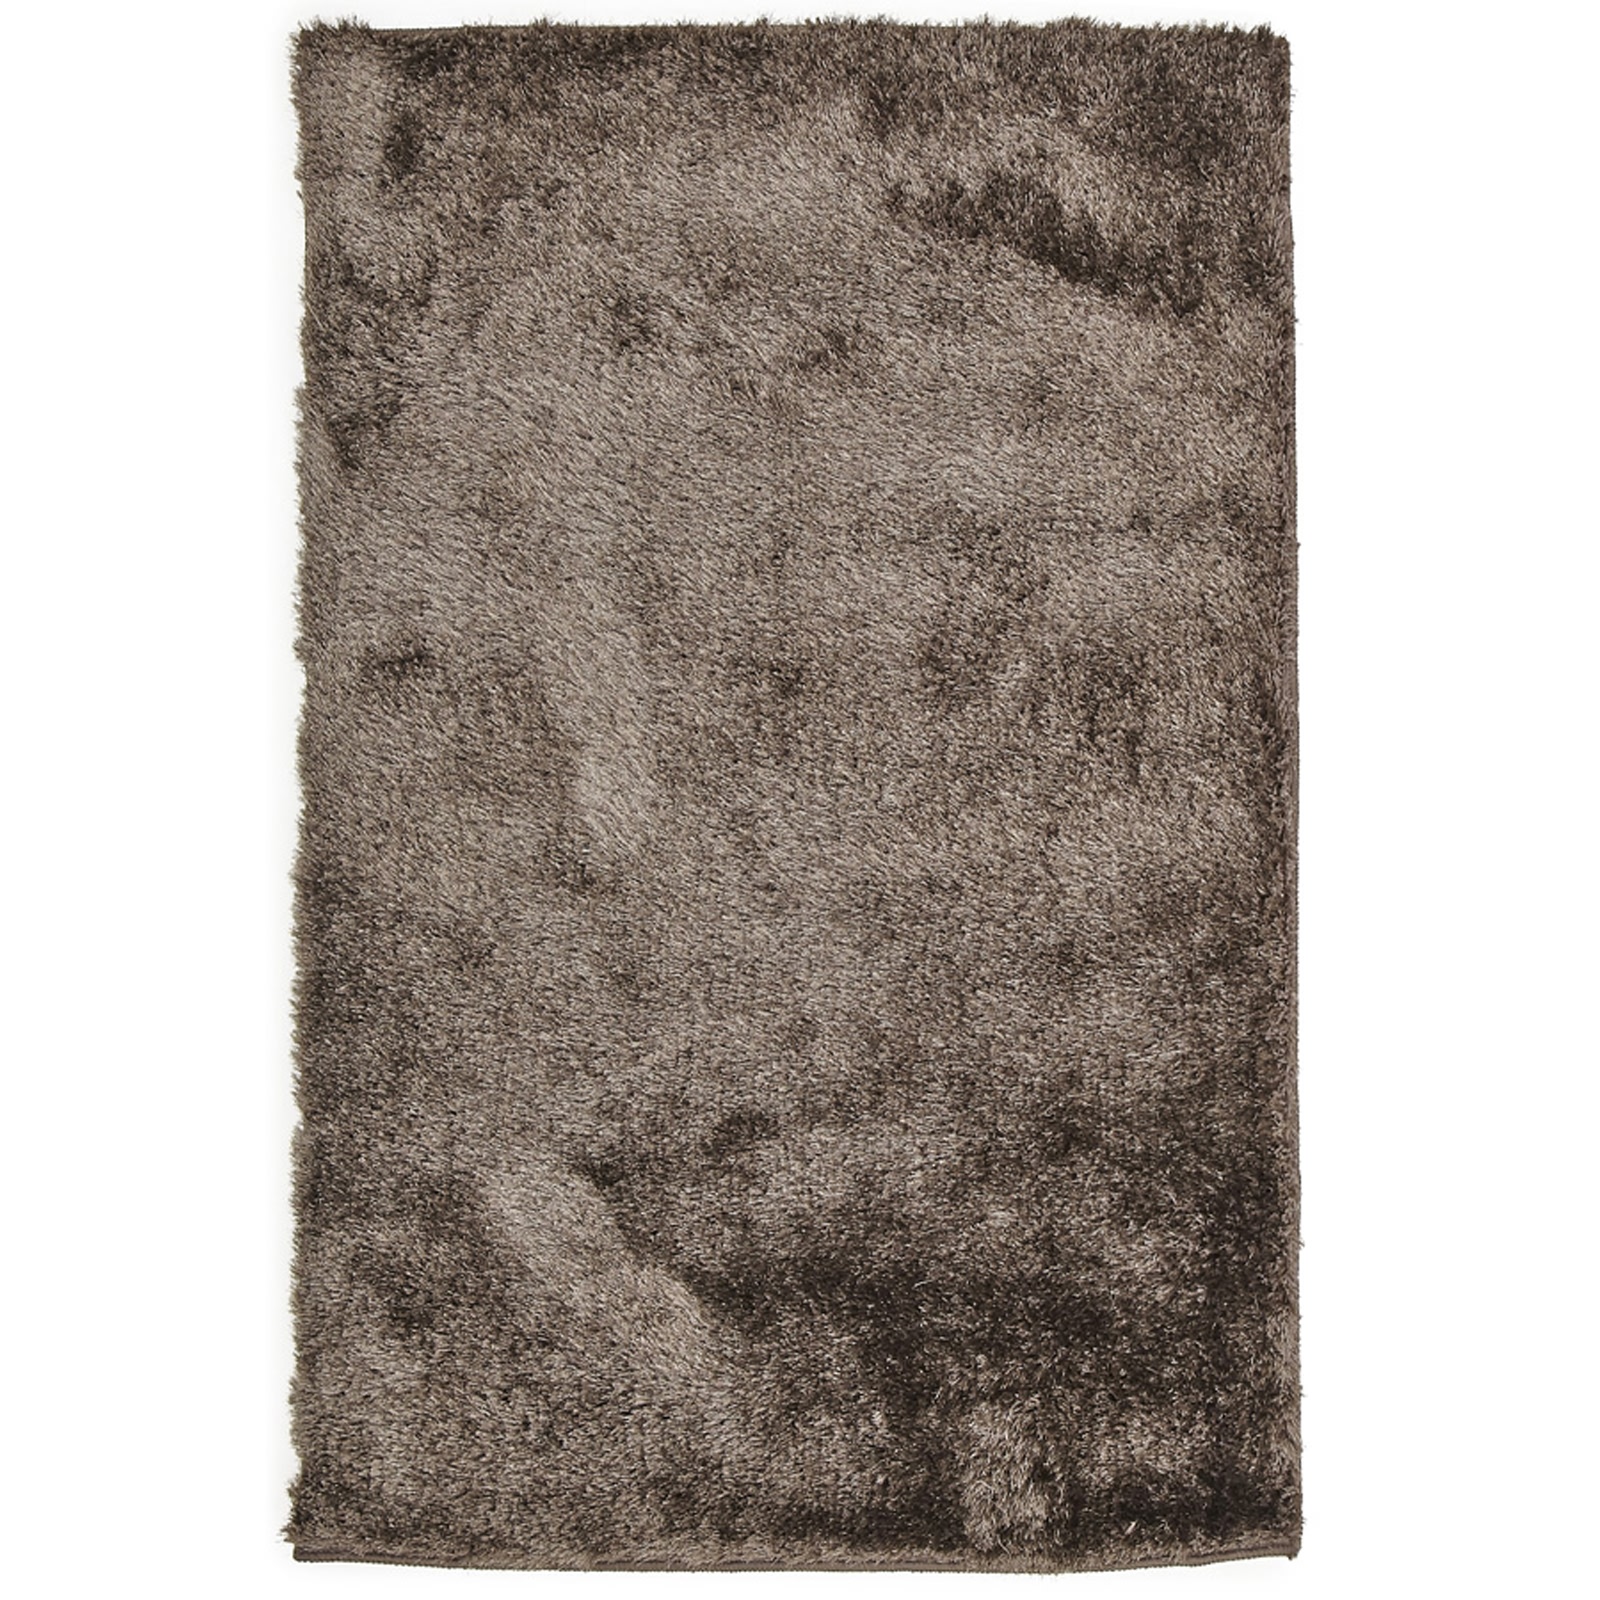 rug texture new-floor-rug-modern-thick-soft-plush-shag- IPHGRZM